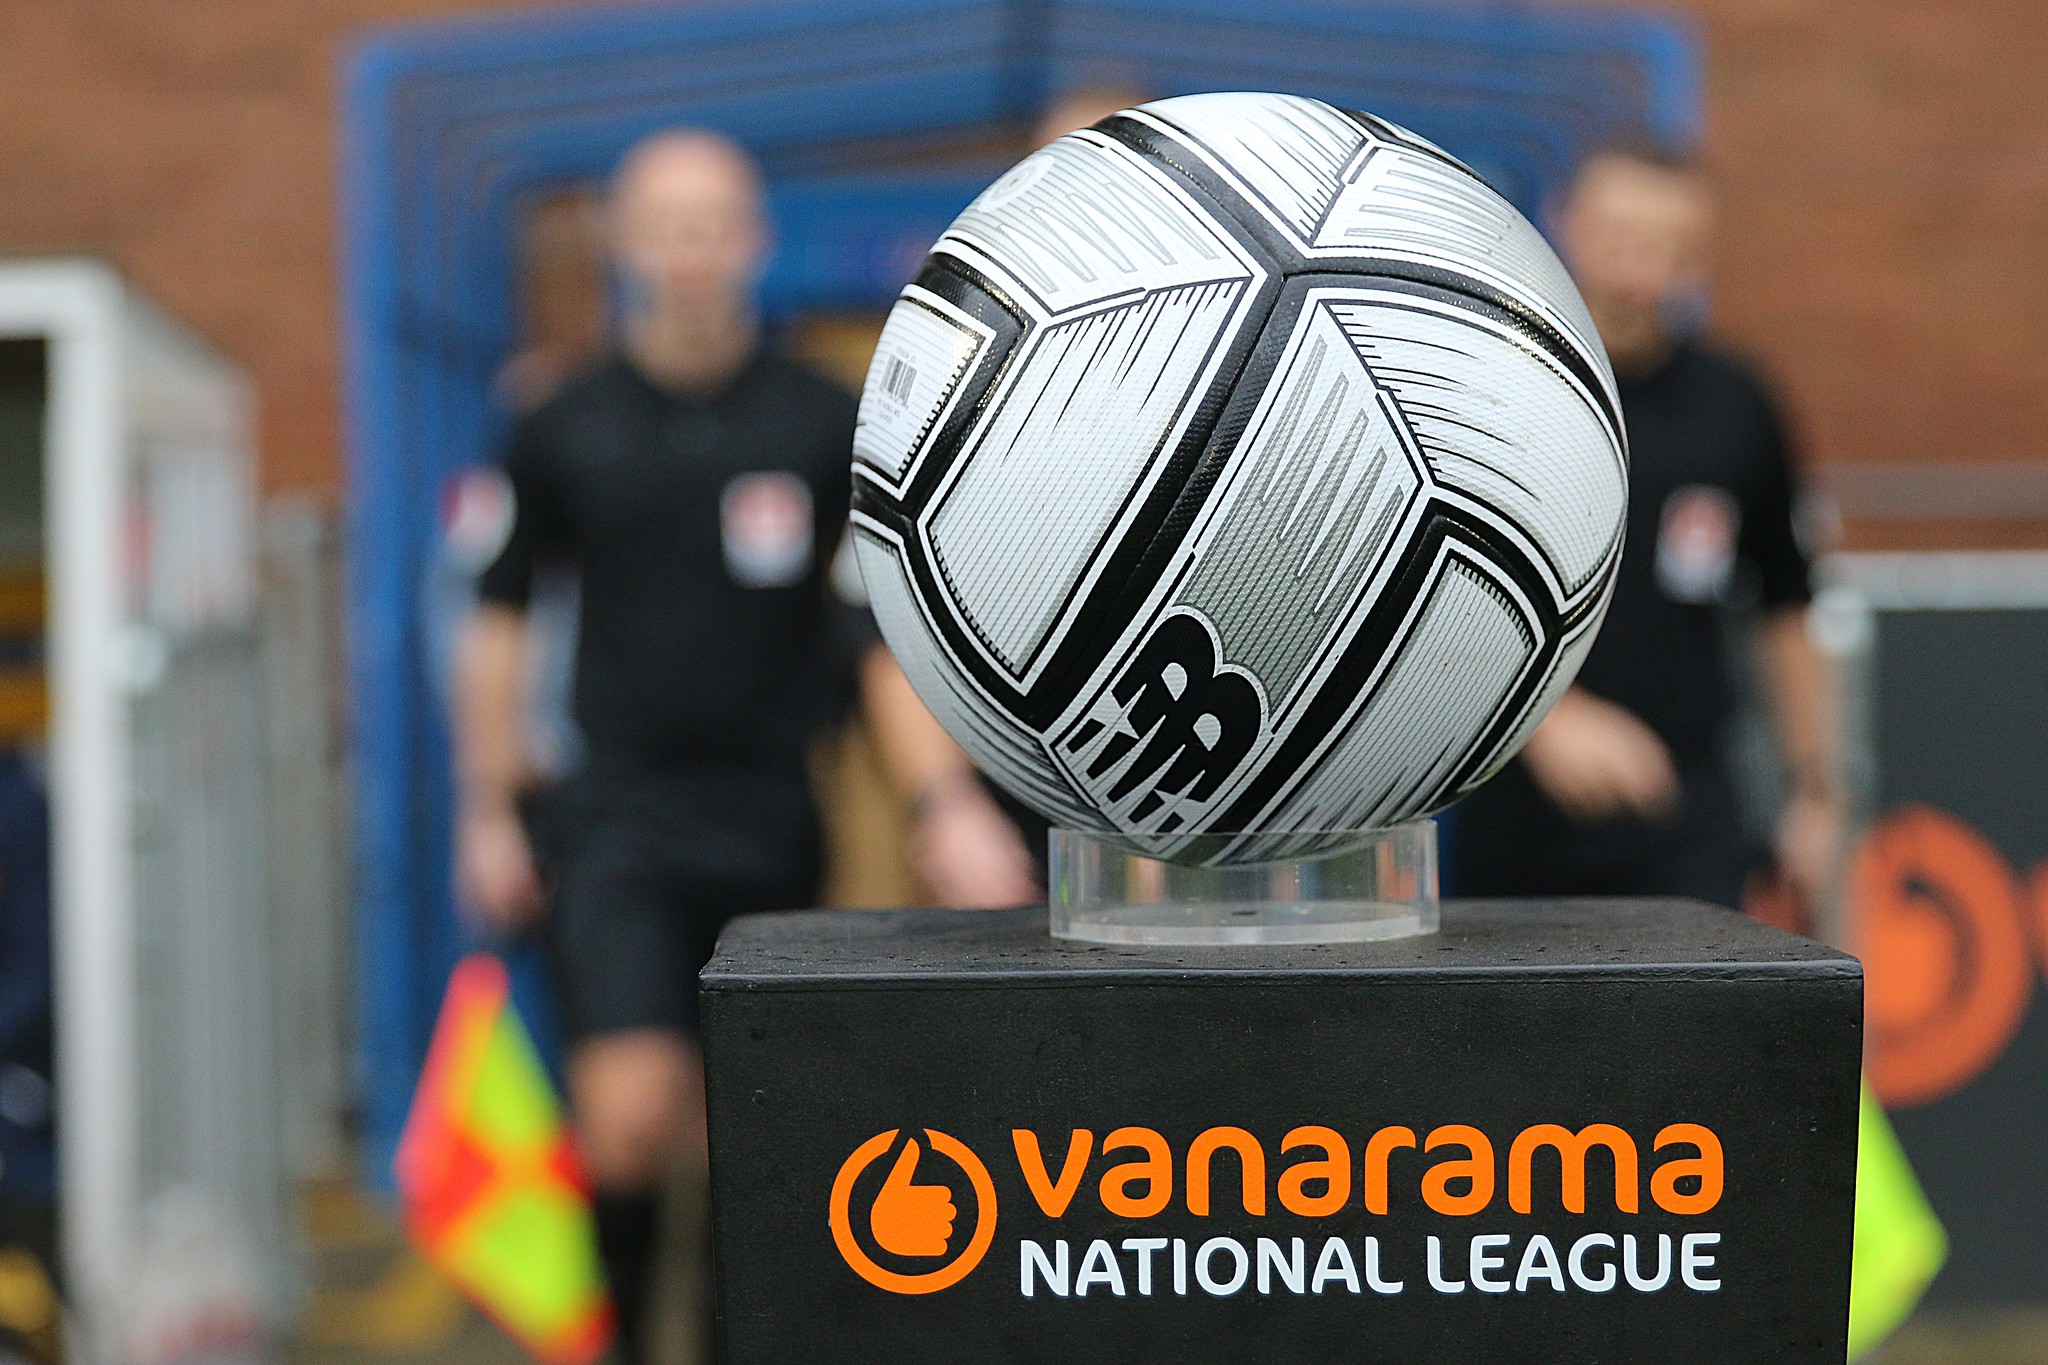 Vanarama National League Highlights Embargo